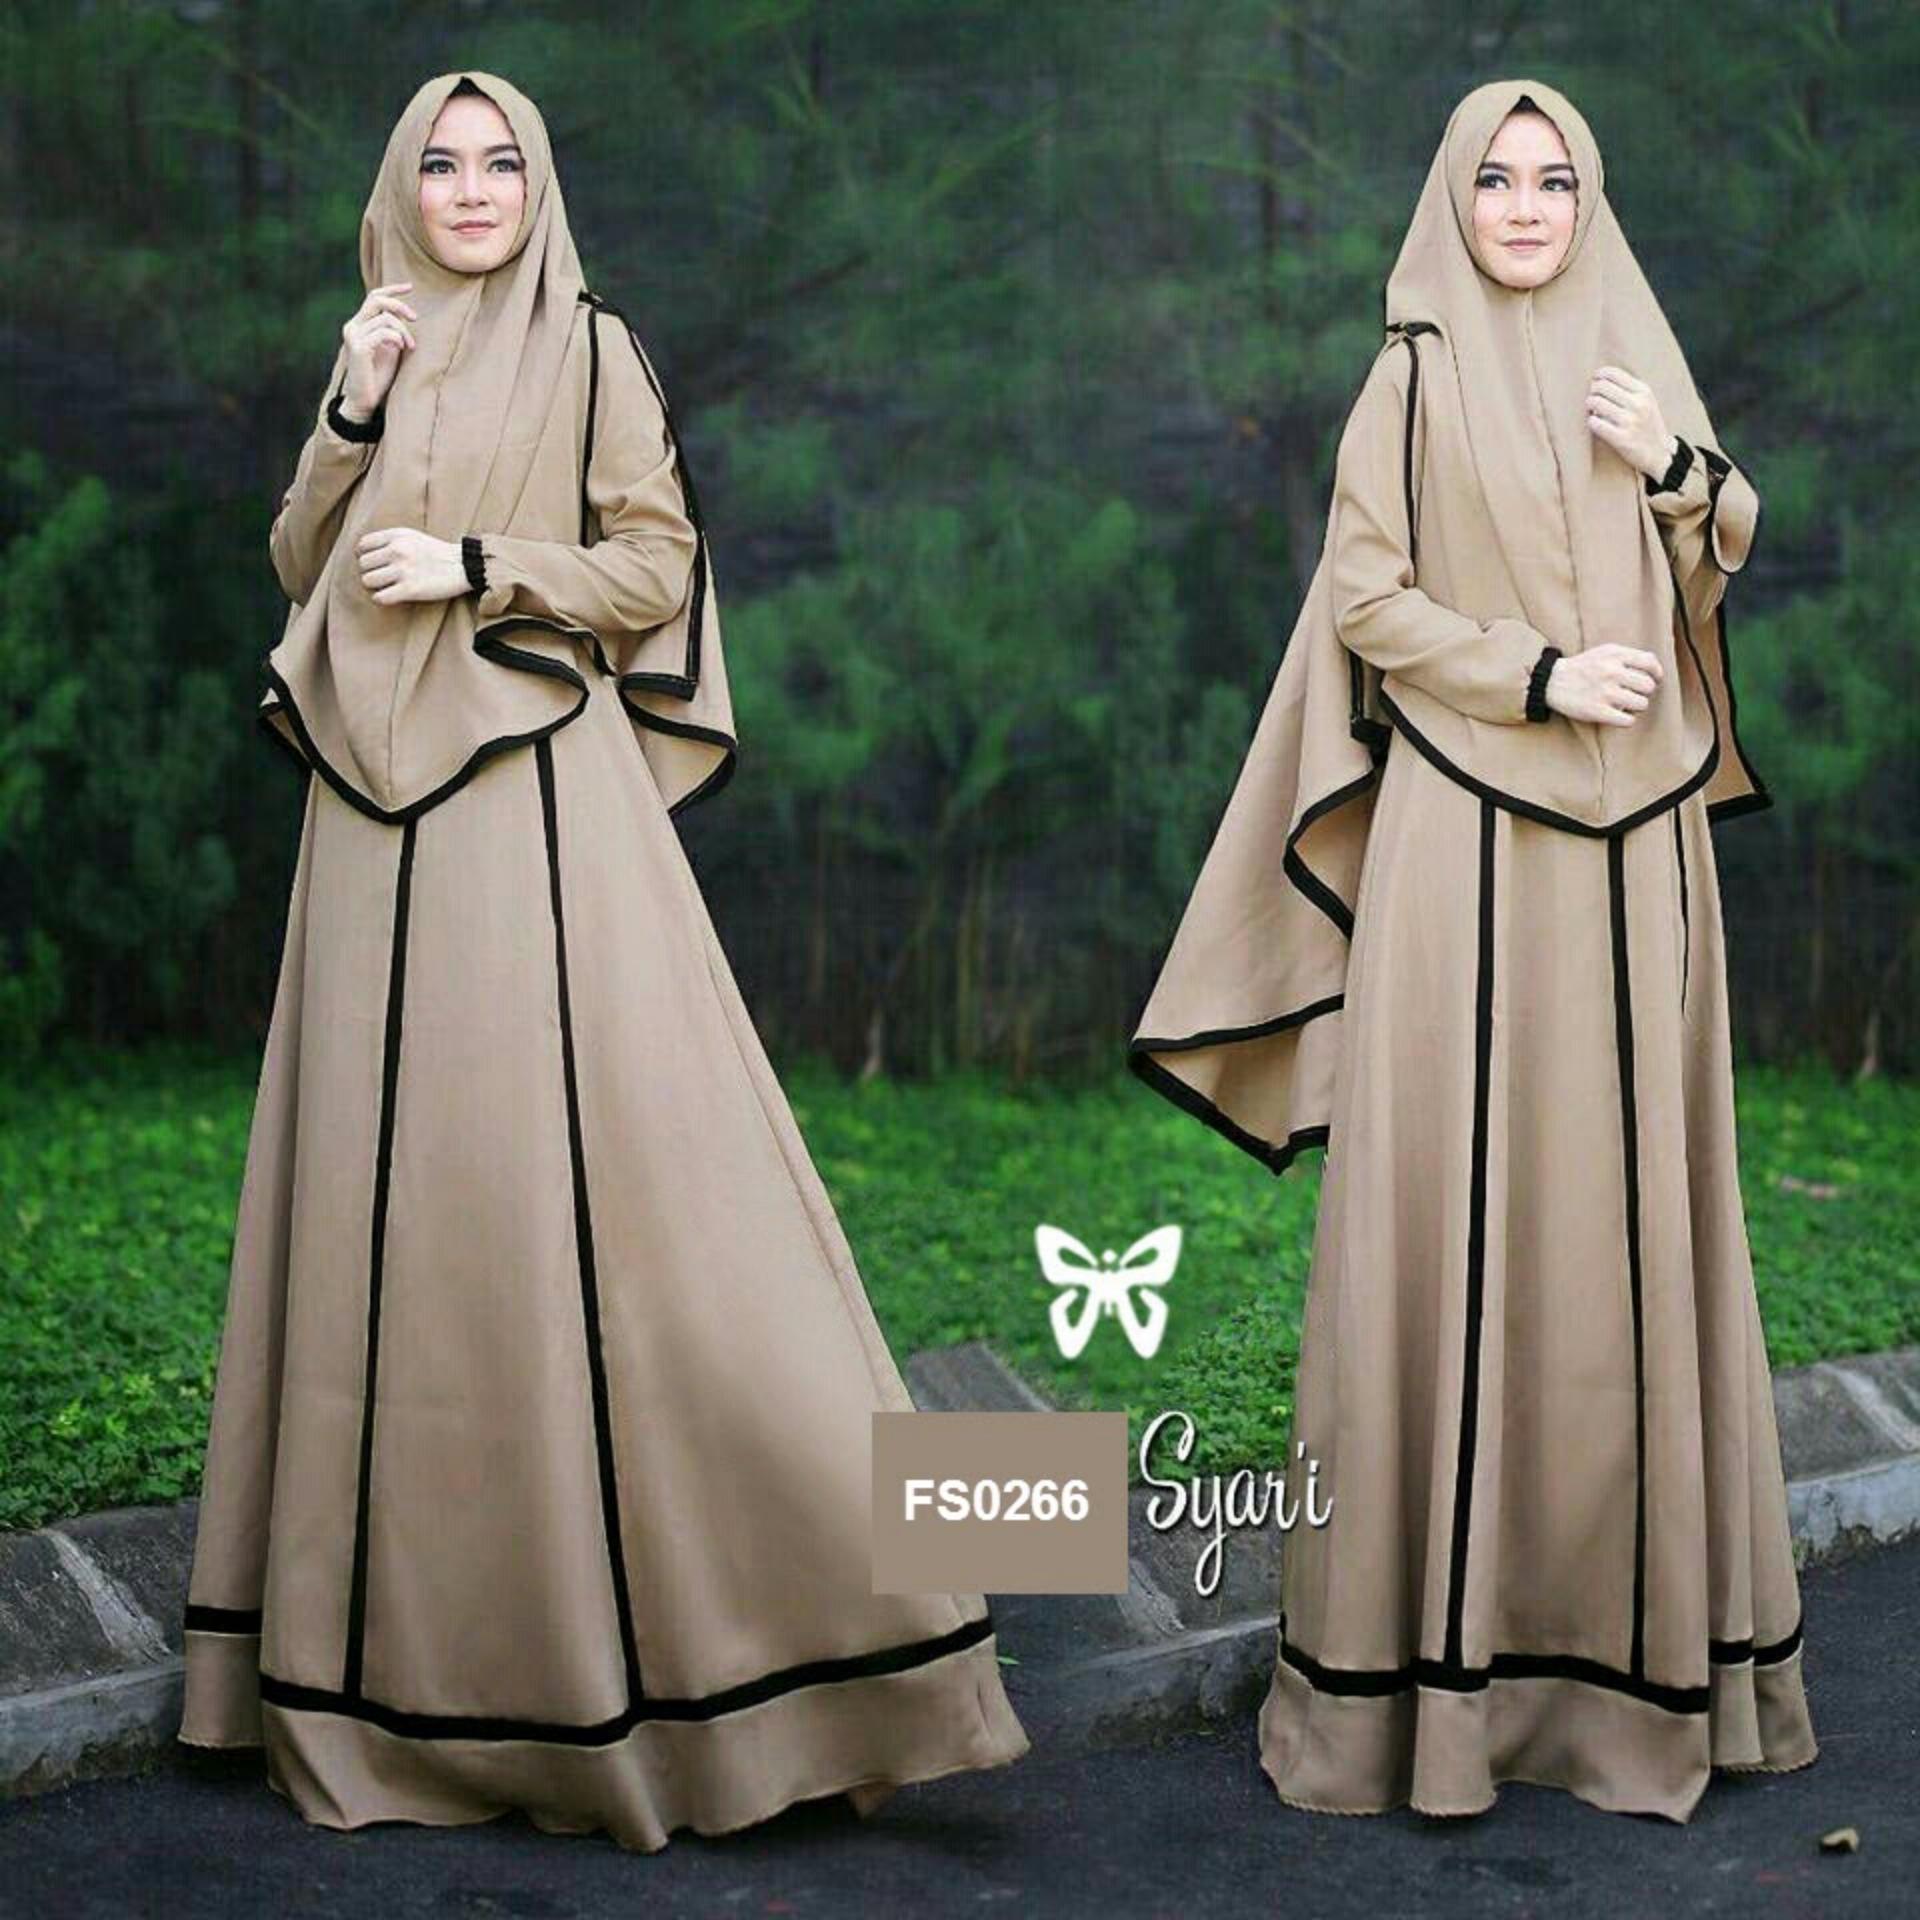 Flavia Store Gamis Syari Set 2 in 1 FS0267 - TOSCA / Baju Muslim Wanita Syar'i / Gaun Muslimah / Maxi Dress Lengan Panjang / Hijab / Srjanetta